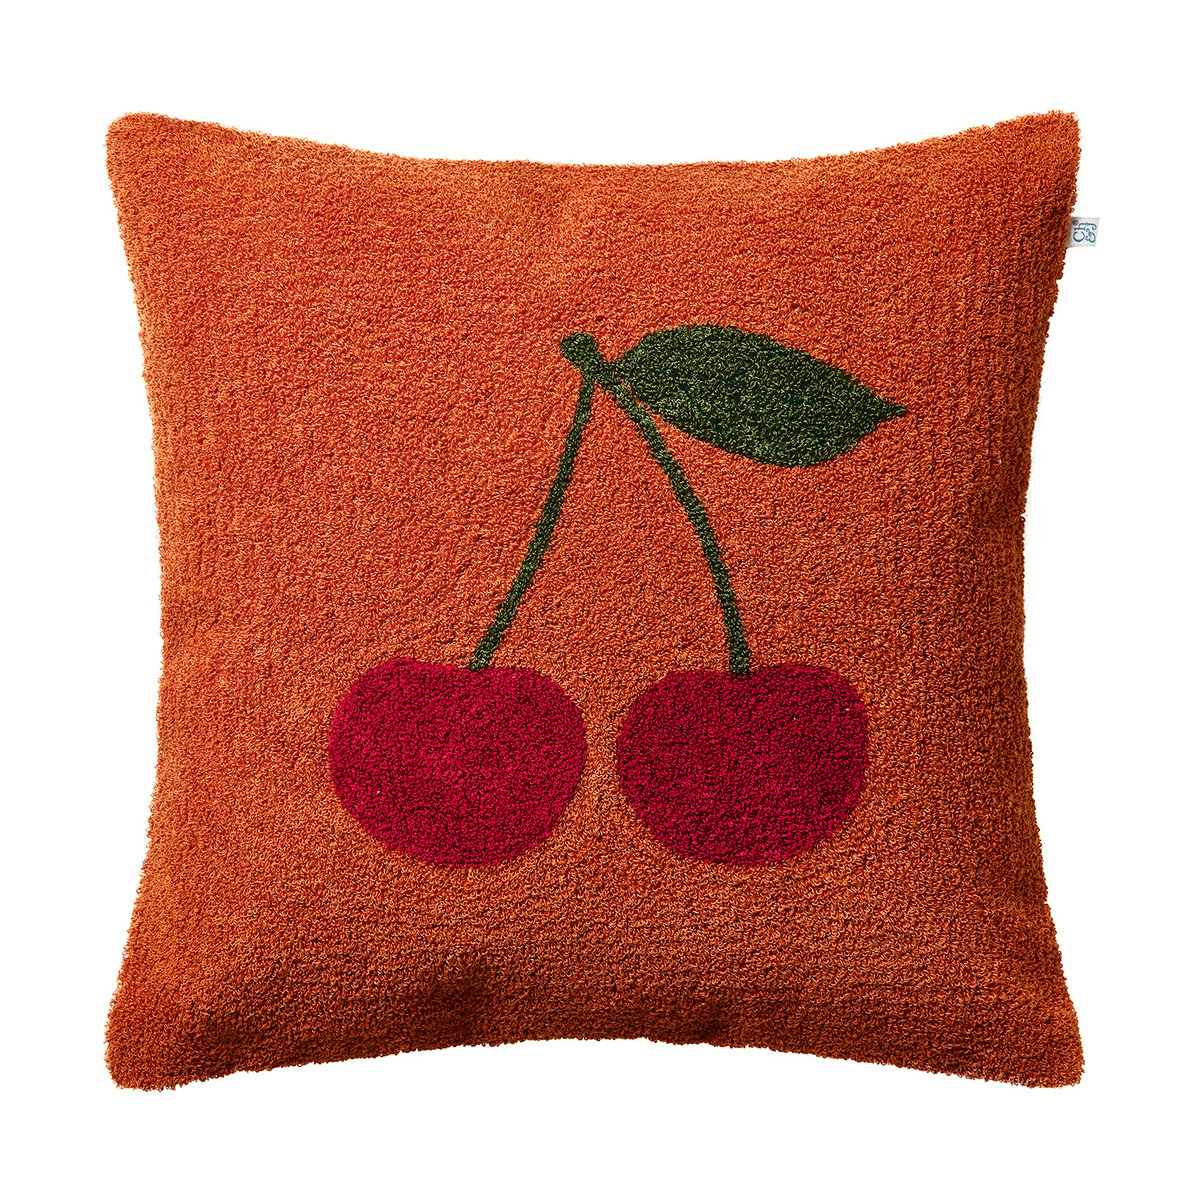 Chhatwal & Jonsson Cherry tyynynpäällinen 50×50 cm Apricot orange-red-green